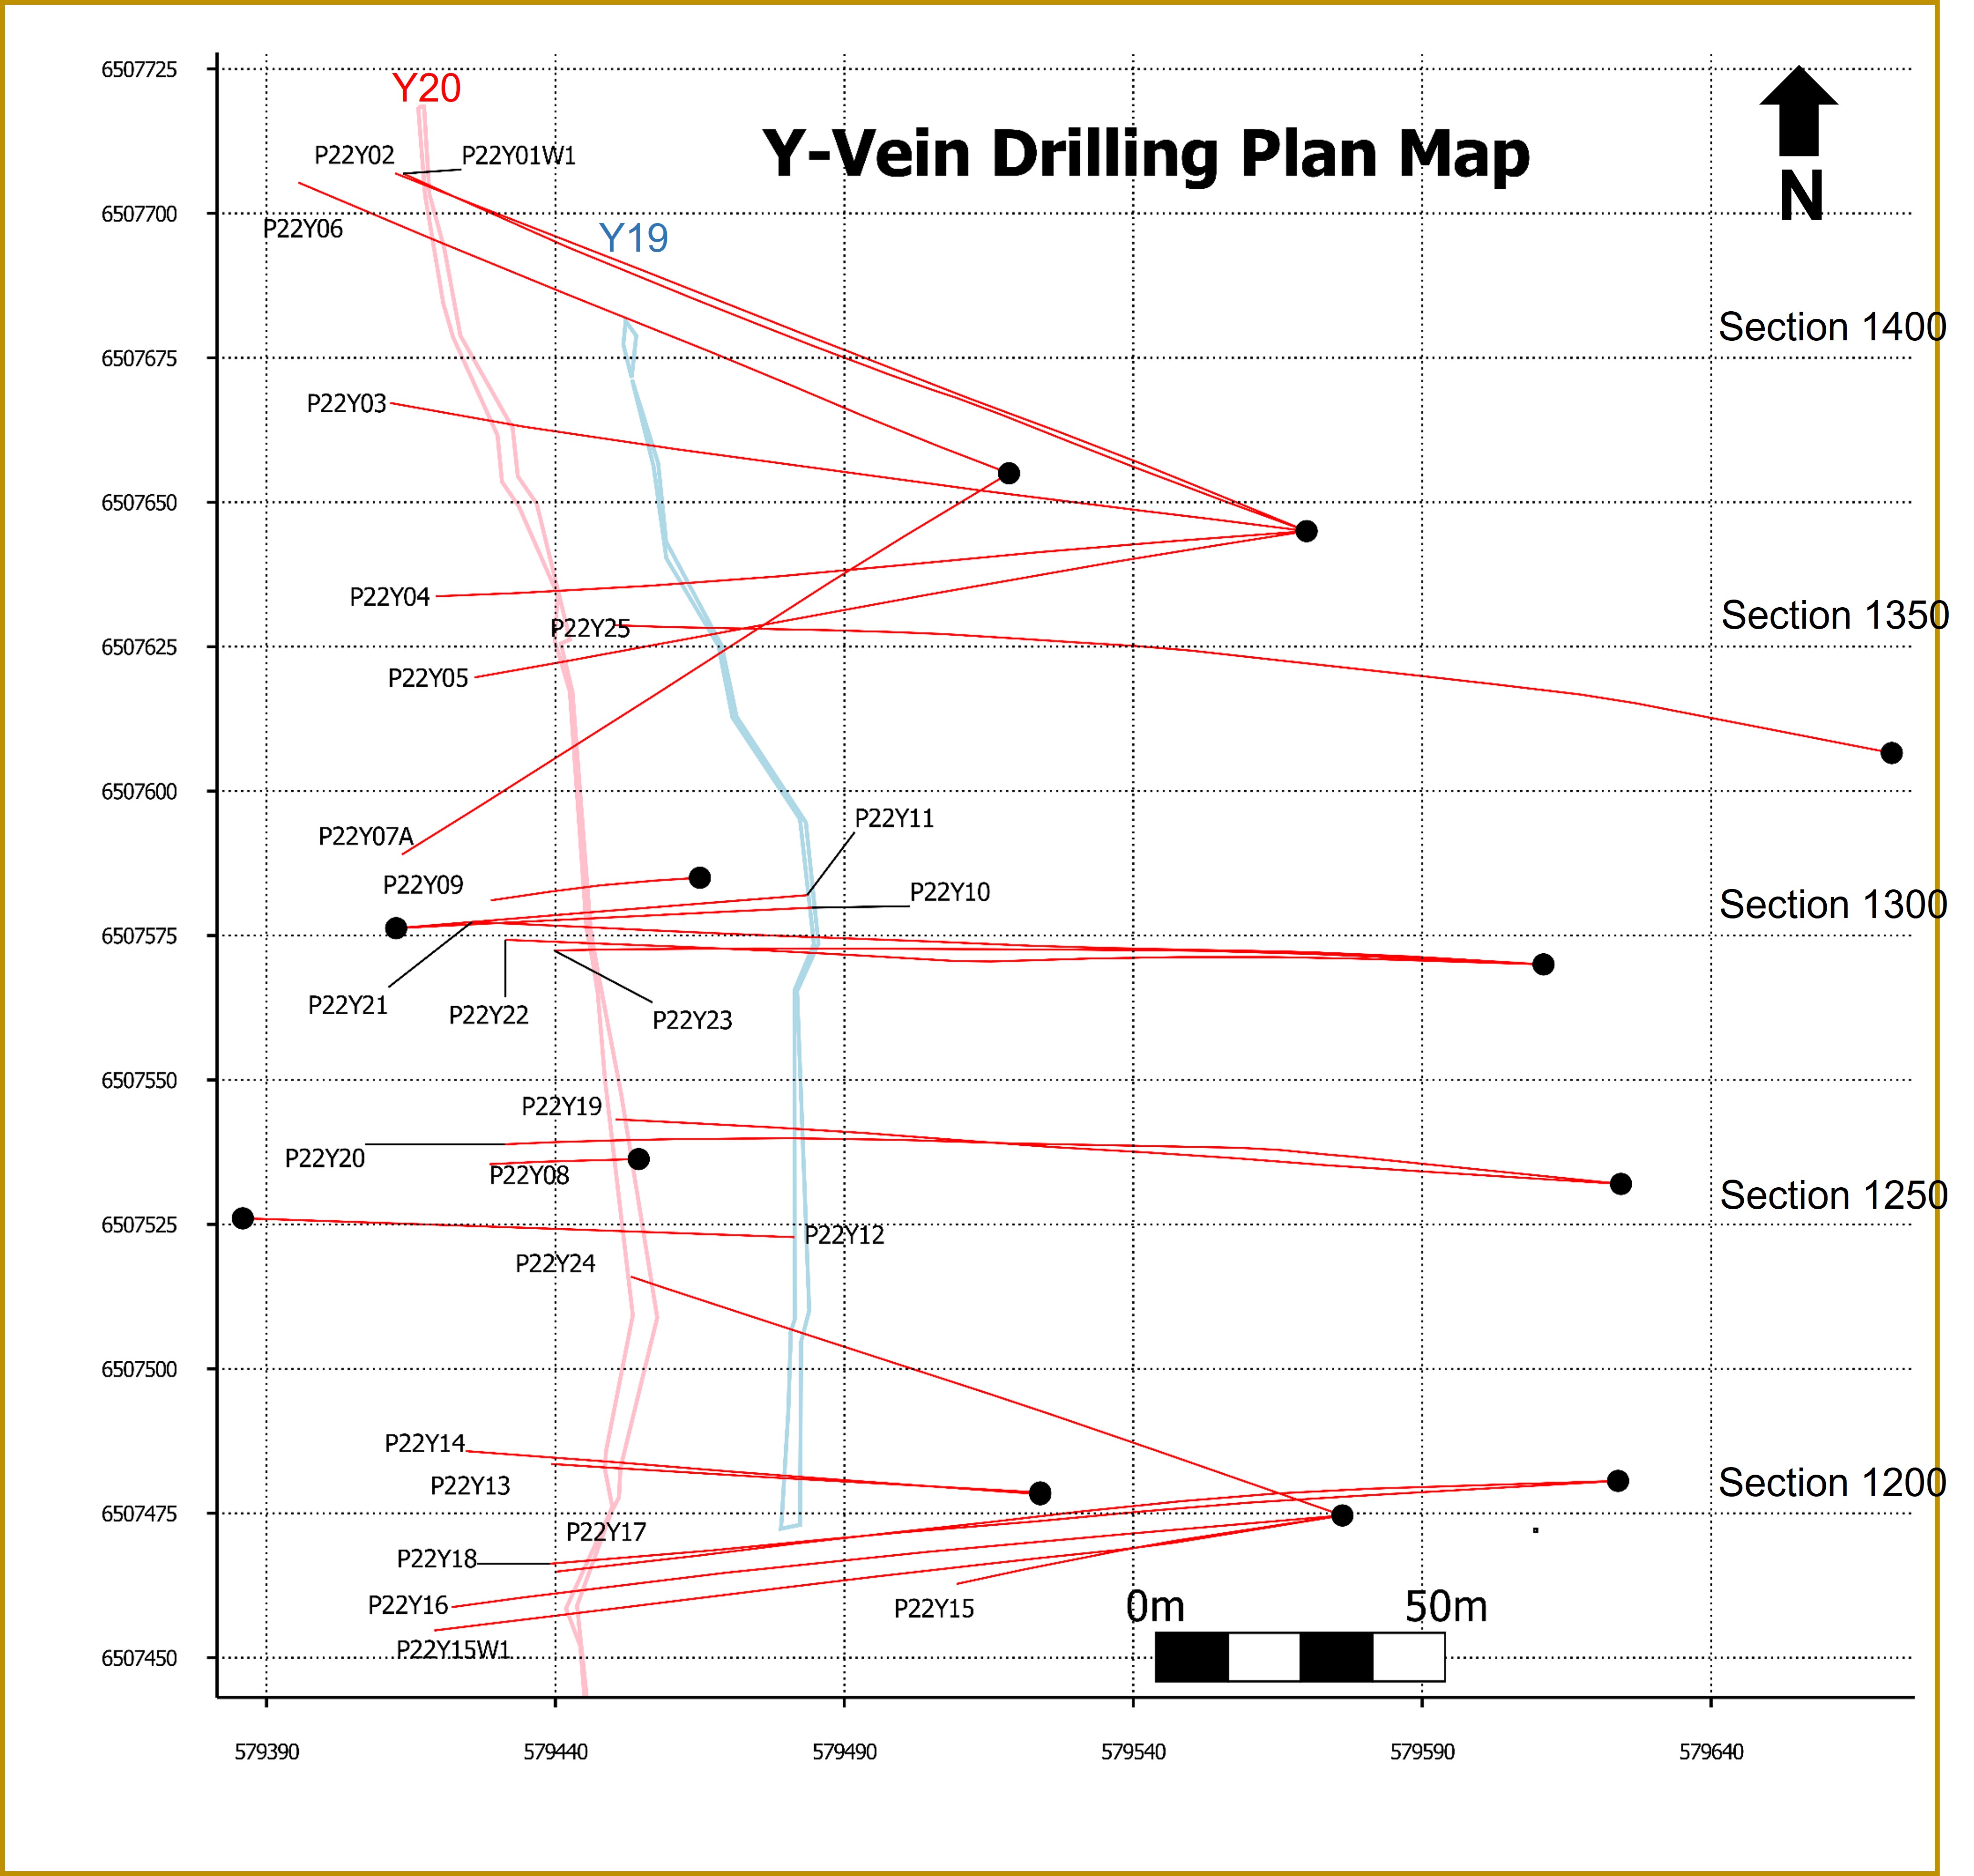 Y-Vein Drilling Plan Map